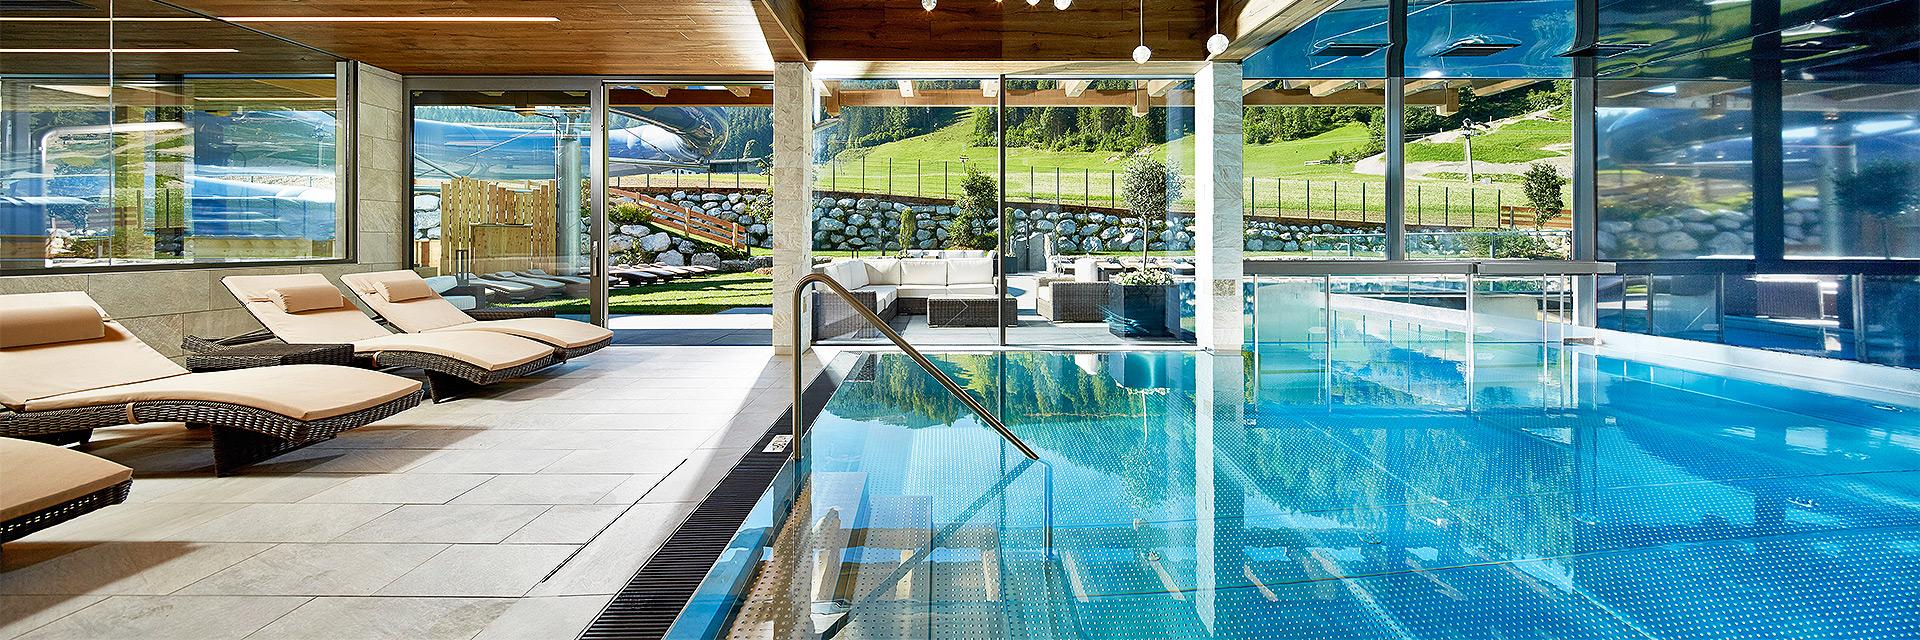 Hotel Riederalm i Østrig | Pool, wellness, gourmet luksus